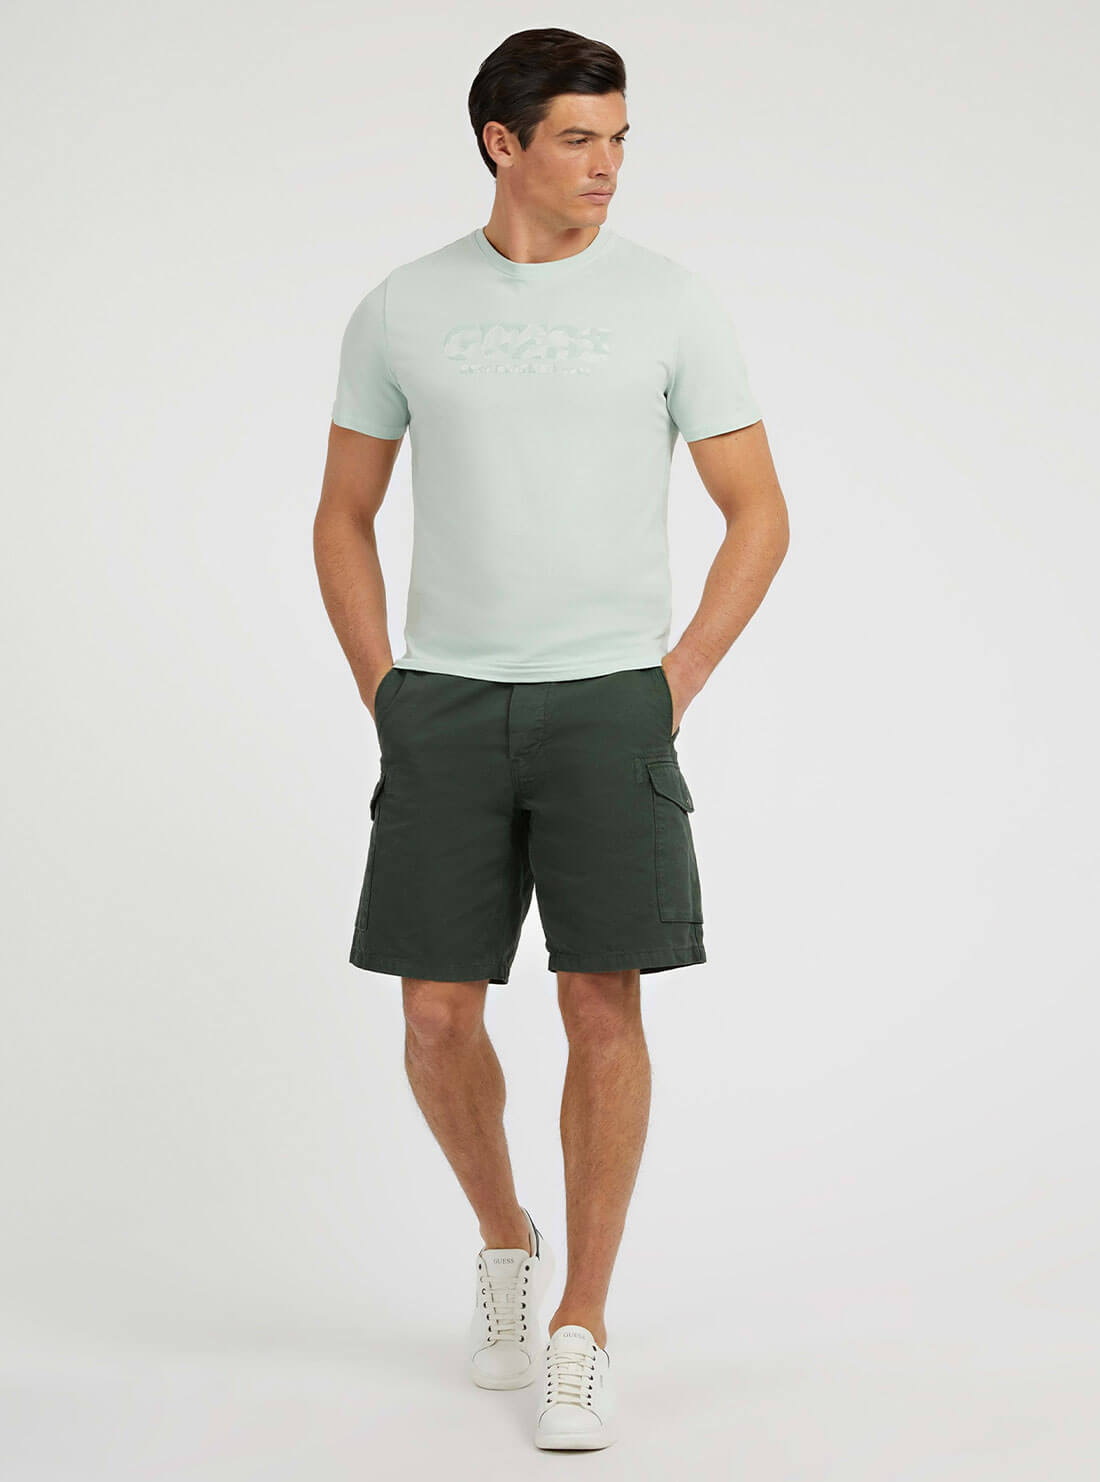 Eco Mint Green Rubber Logo T-Shirt | GUESS Men's Apparel | full view